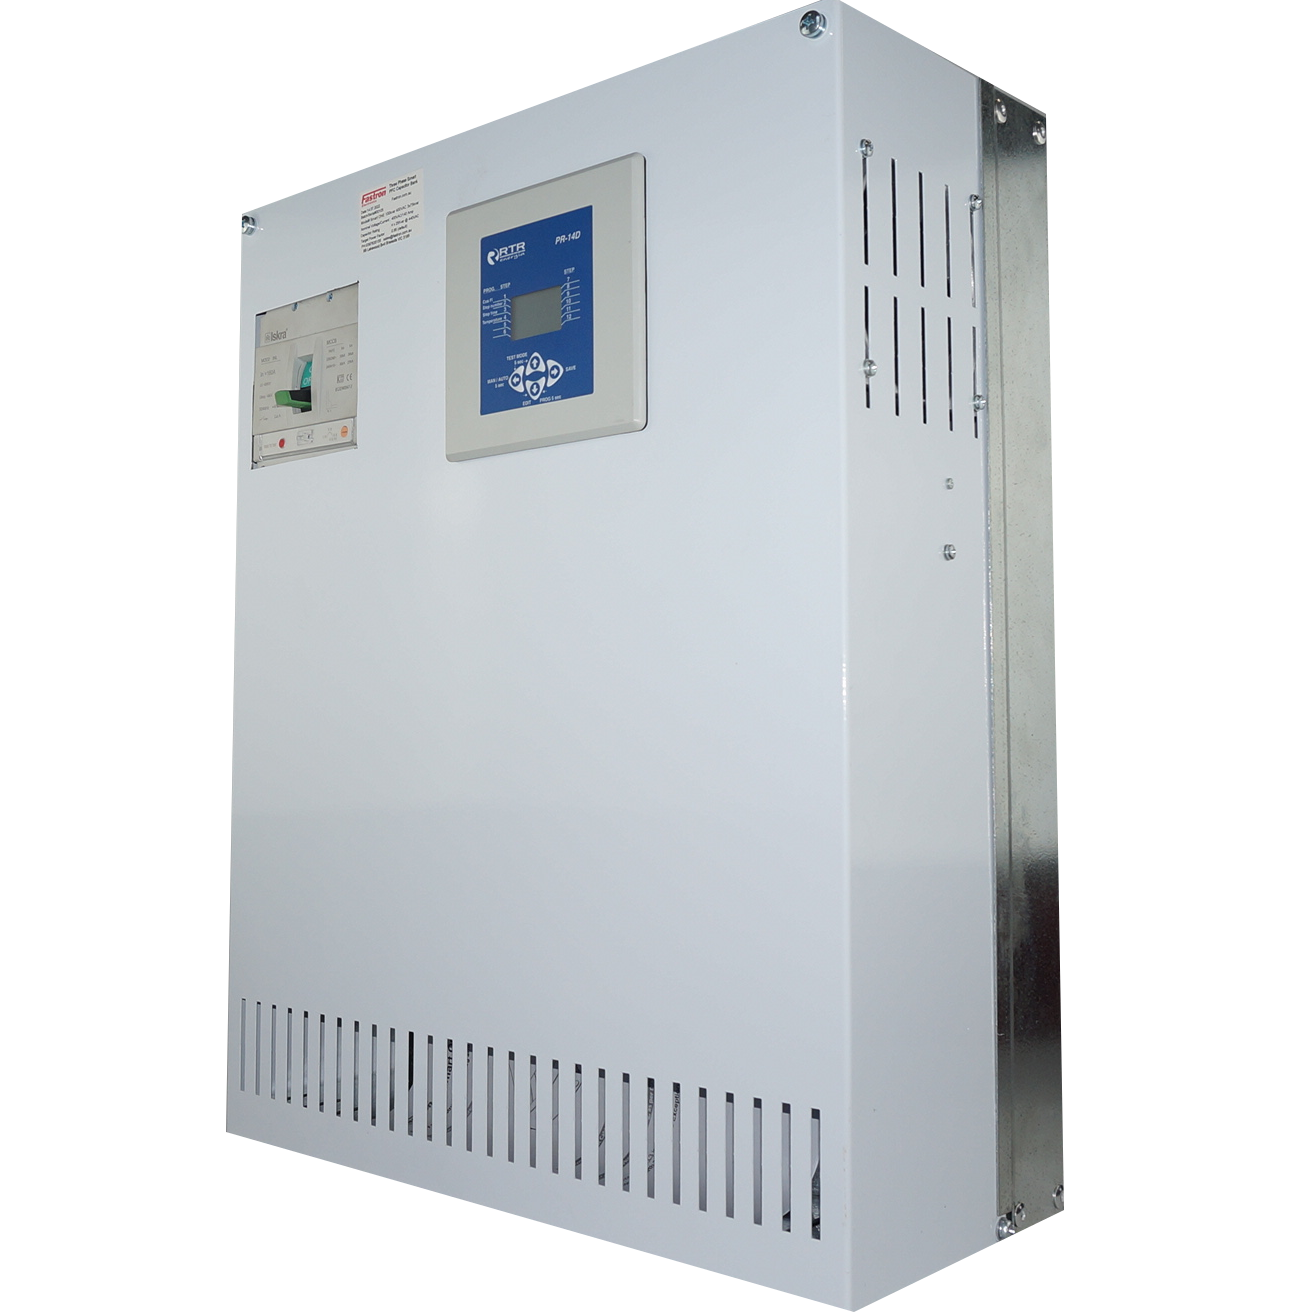 Smart ONE 87.5kvar 400VAC, 87.5kVar Smart Capacitor Bank for Plug and Play Reactive Power Correction, IP21